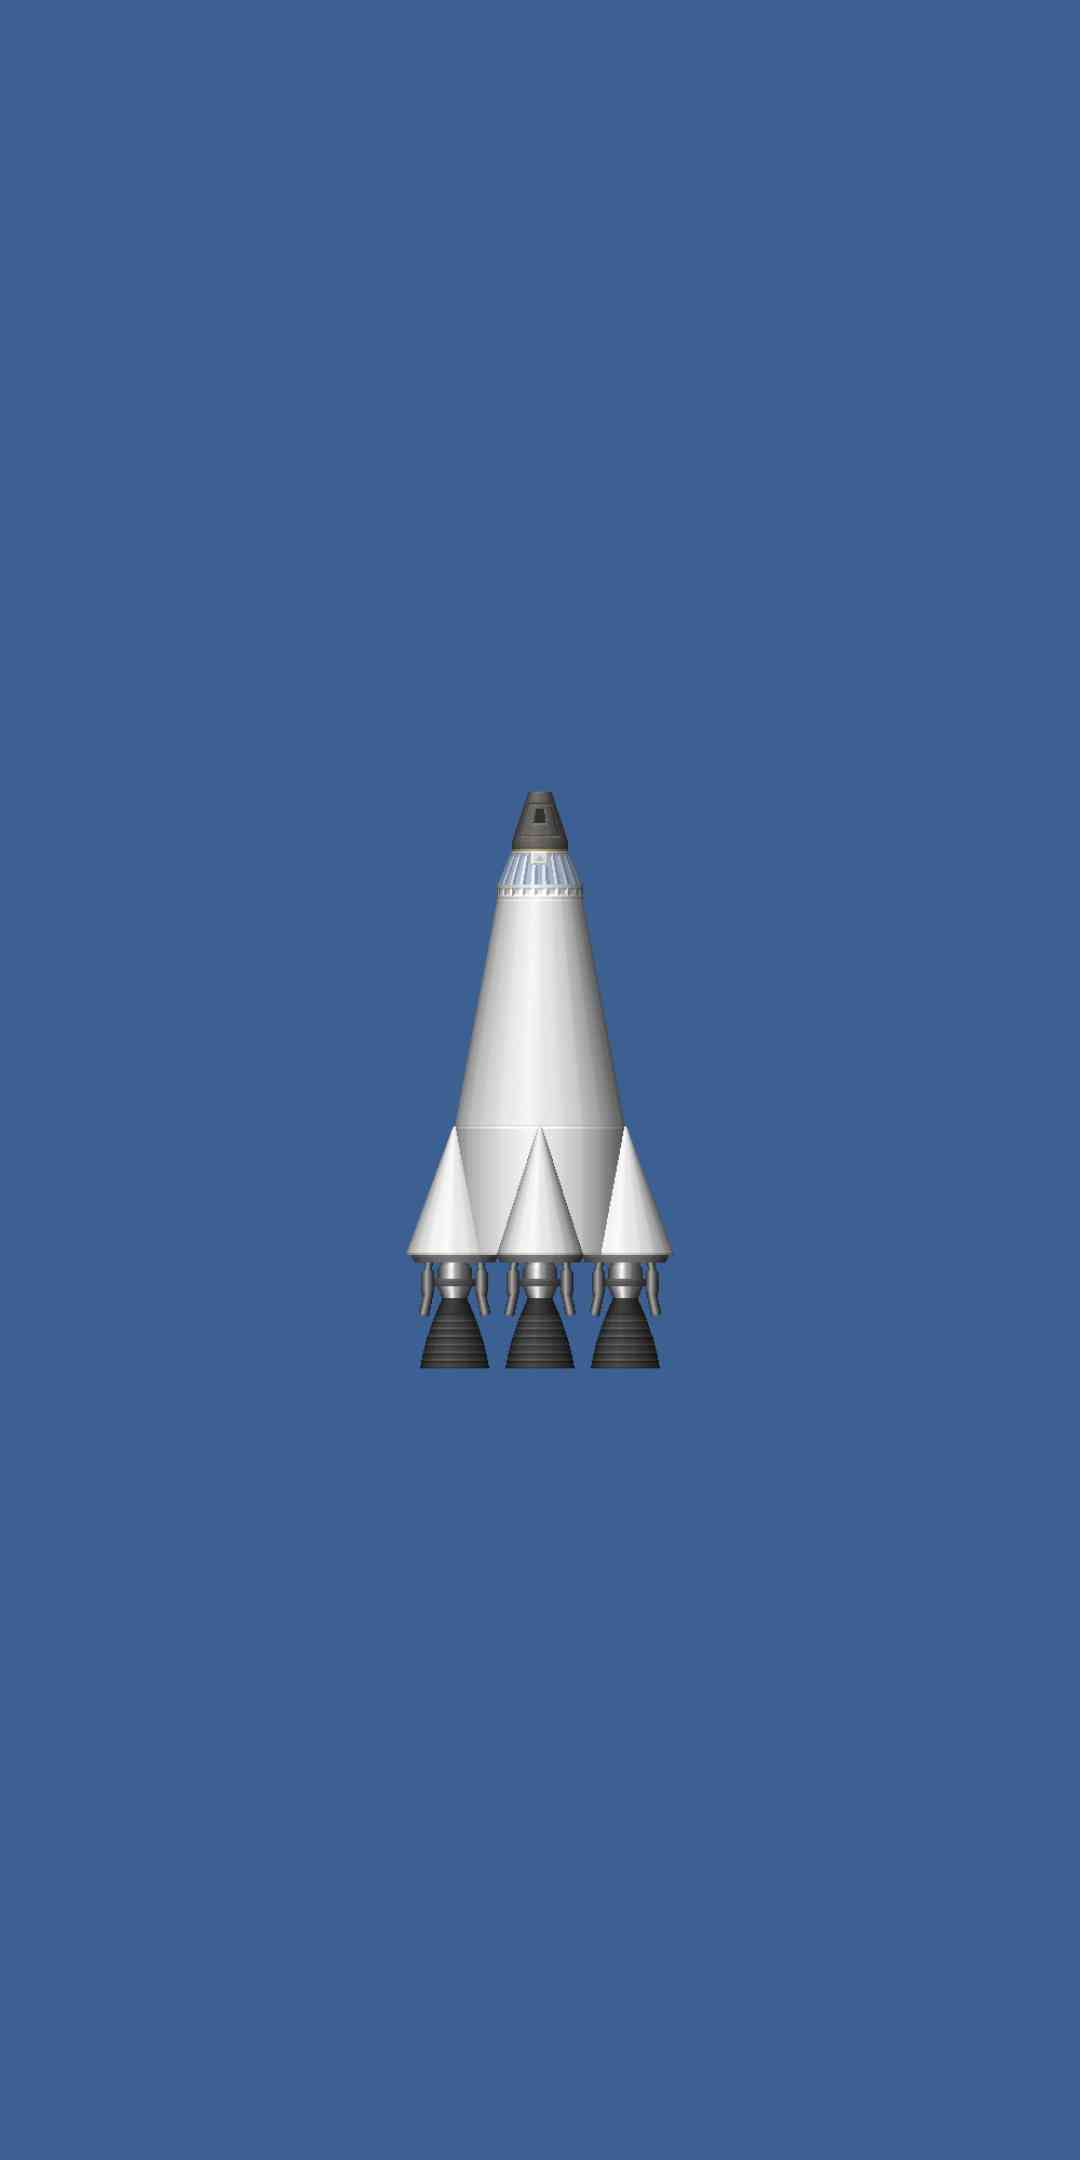 Too small rocket Blueprint for Spaceflight Simulator